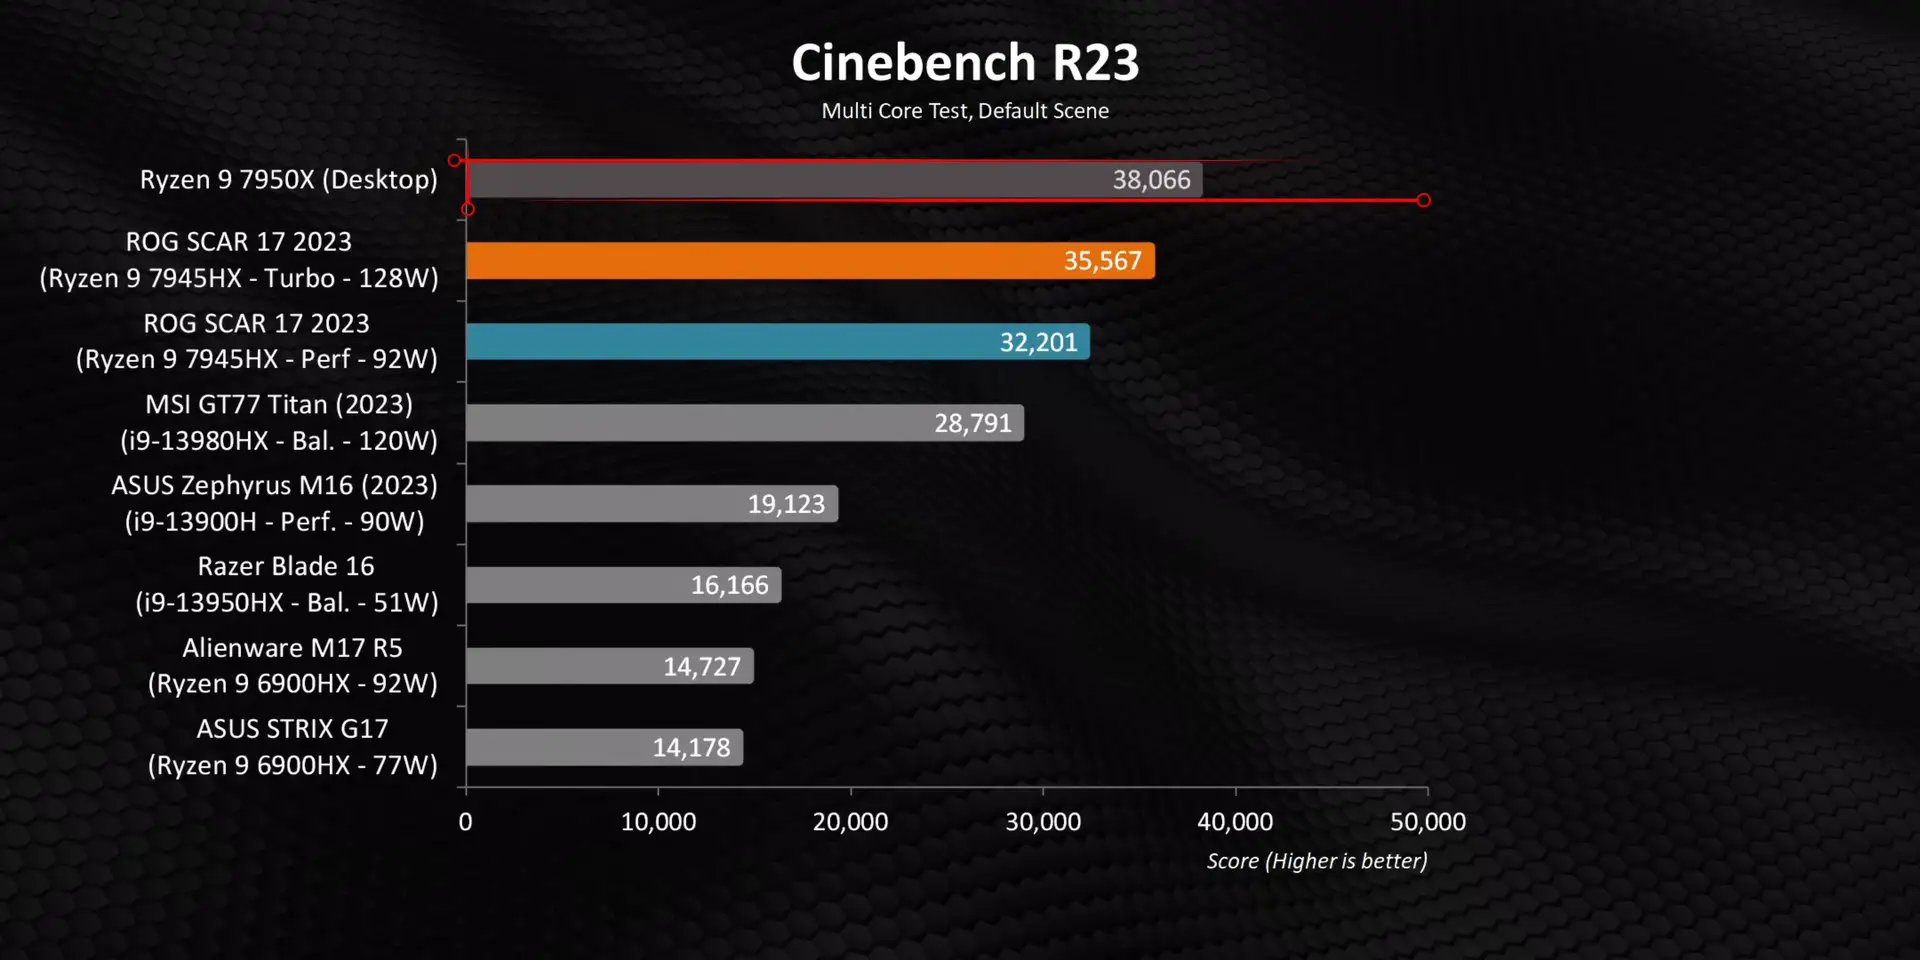 Cinebench R23 Multi Core Test in ROG Strix Scar 17